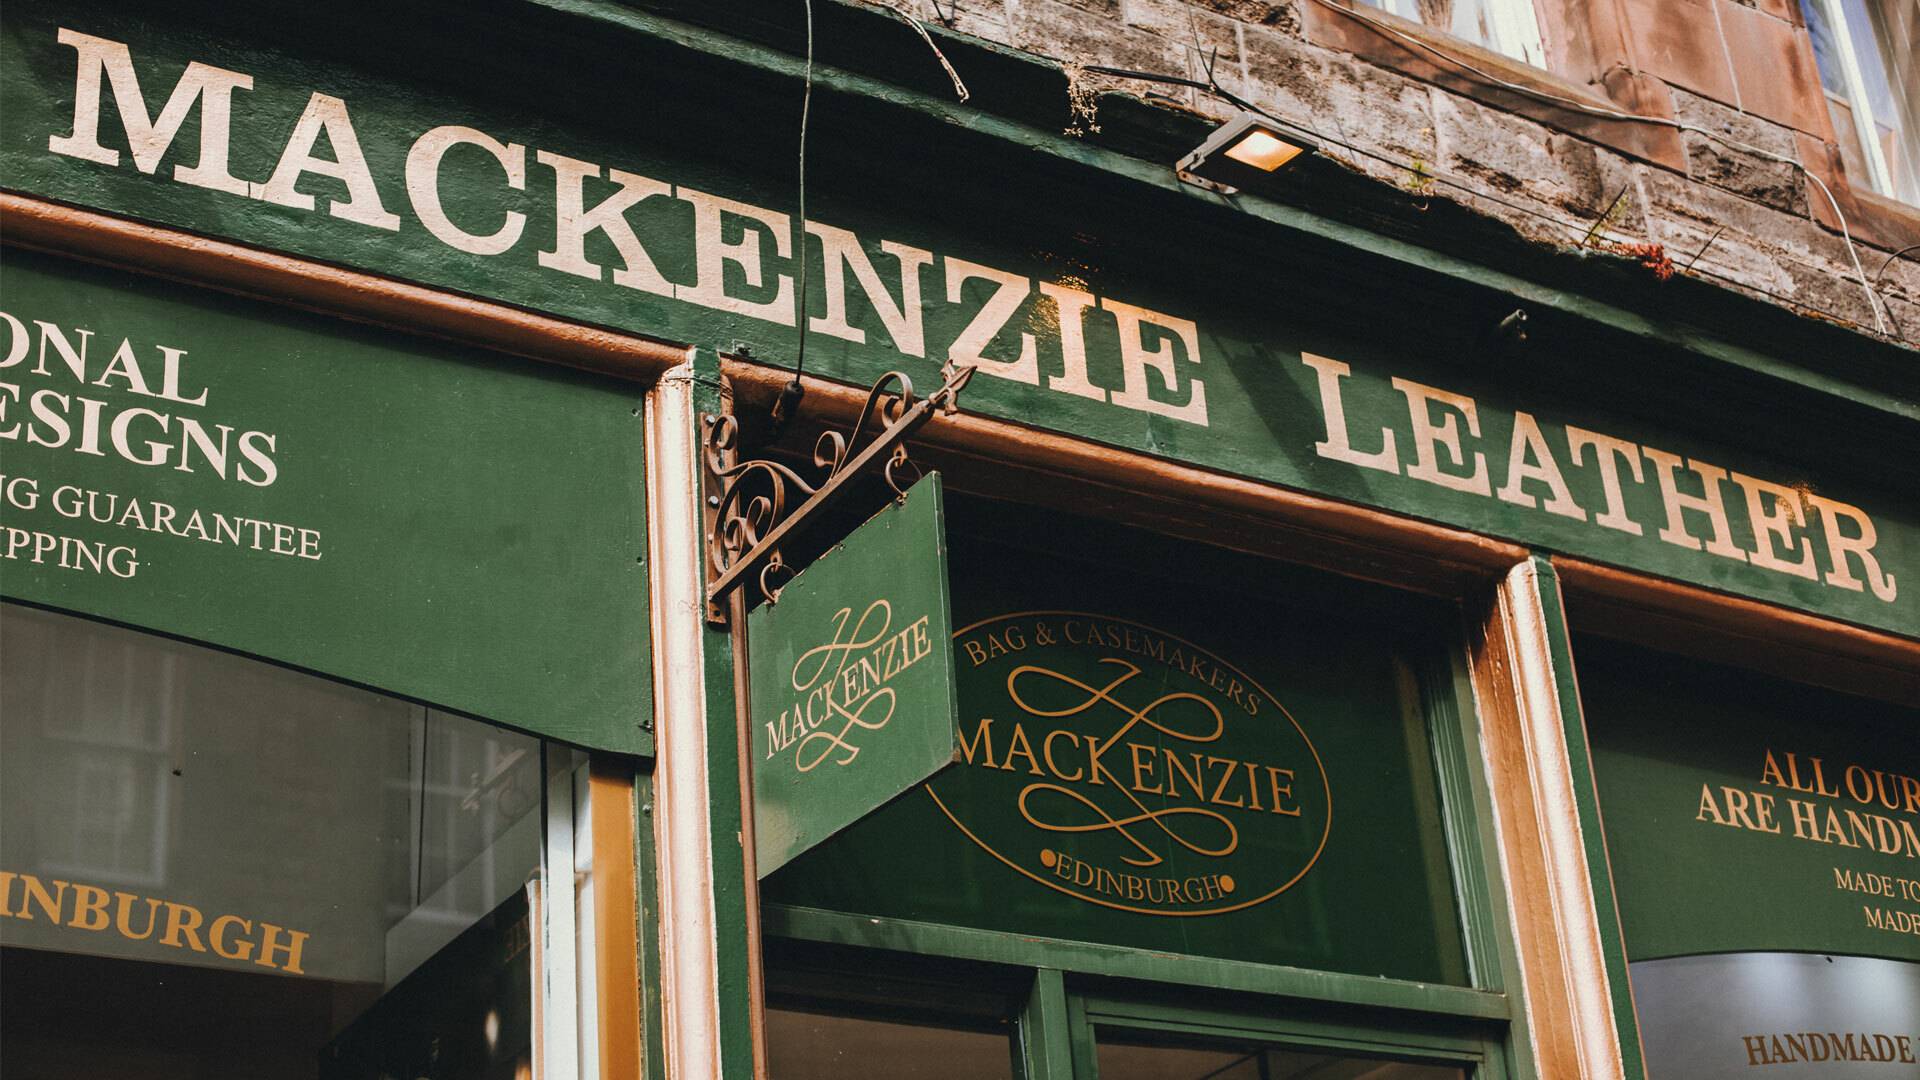 Mackenzie Leather Edinburgh shop.